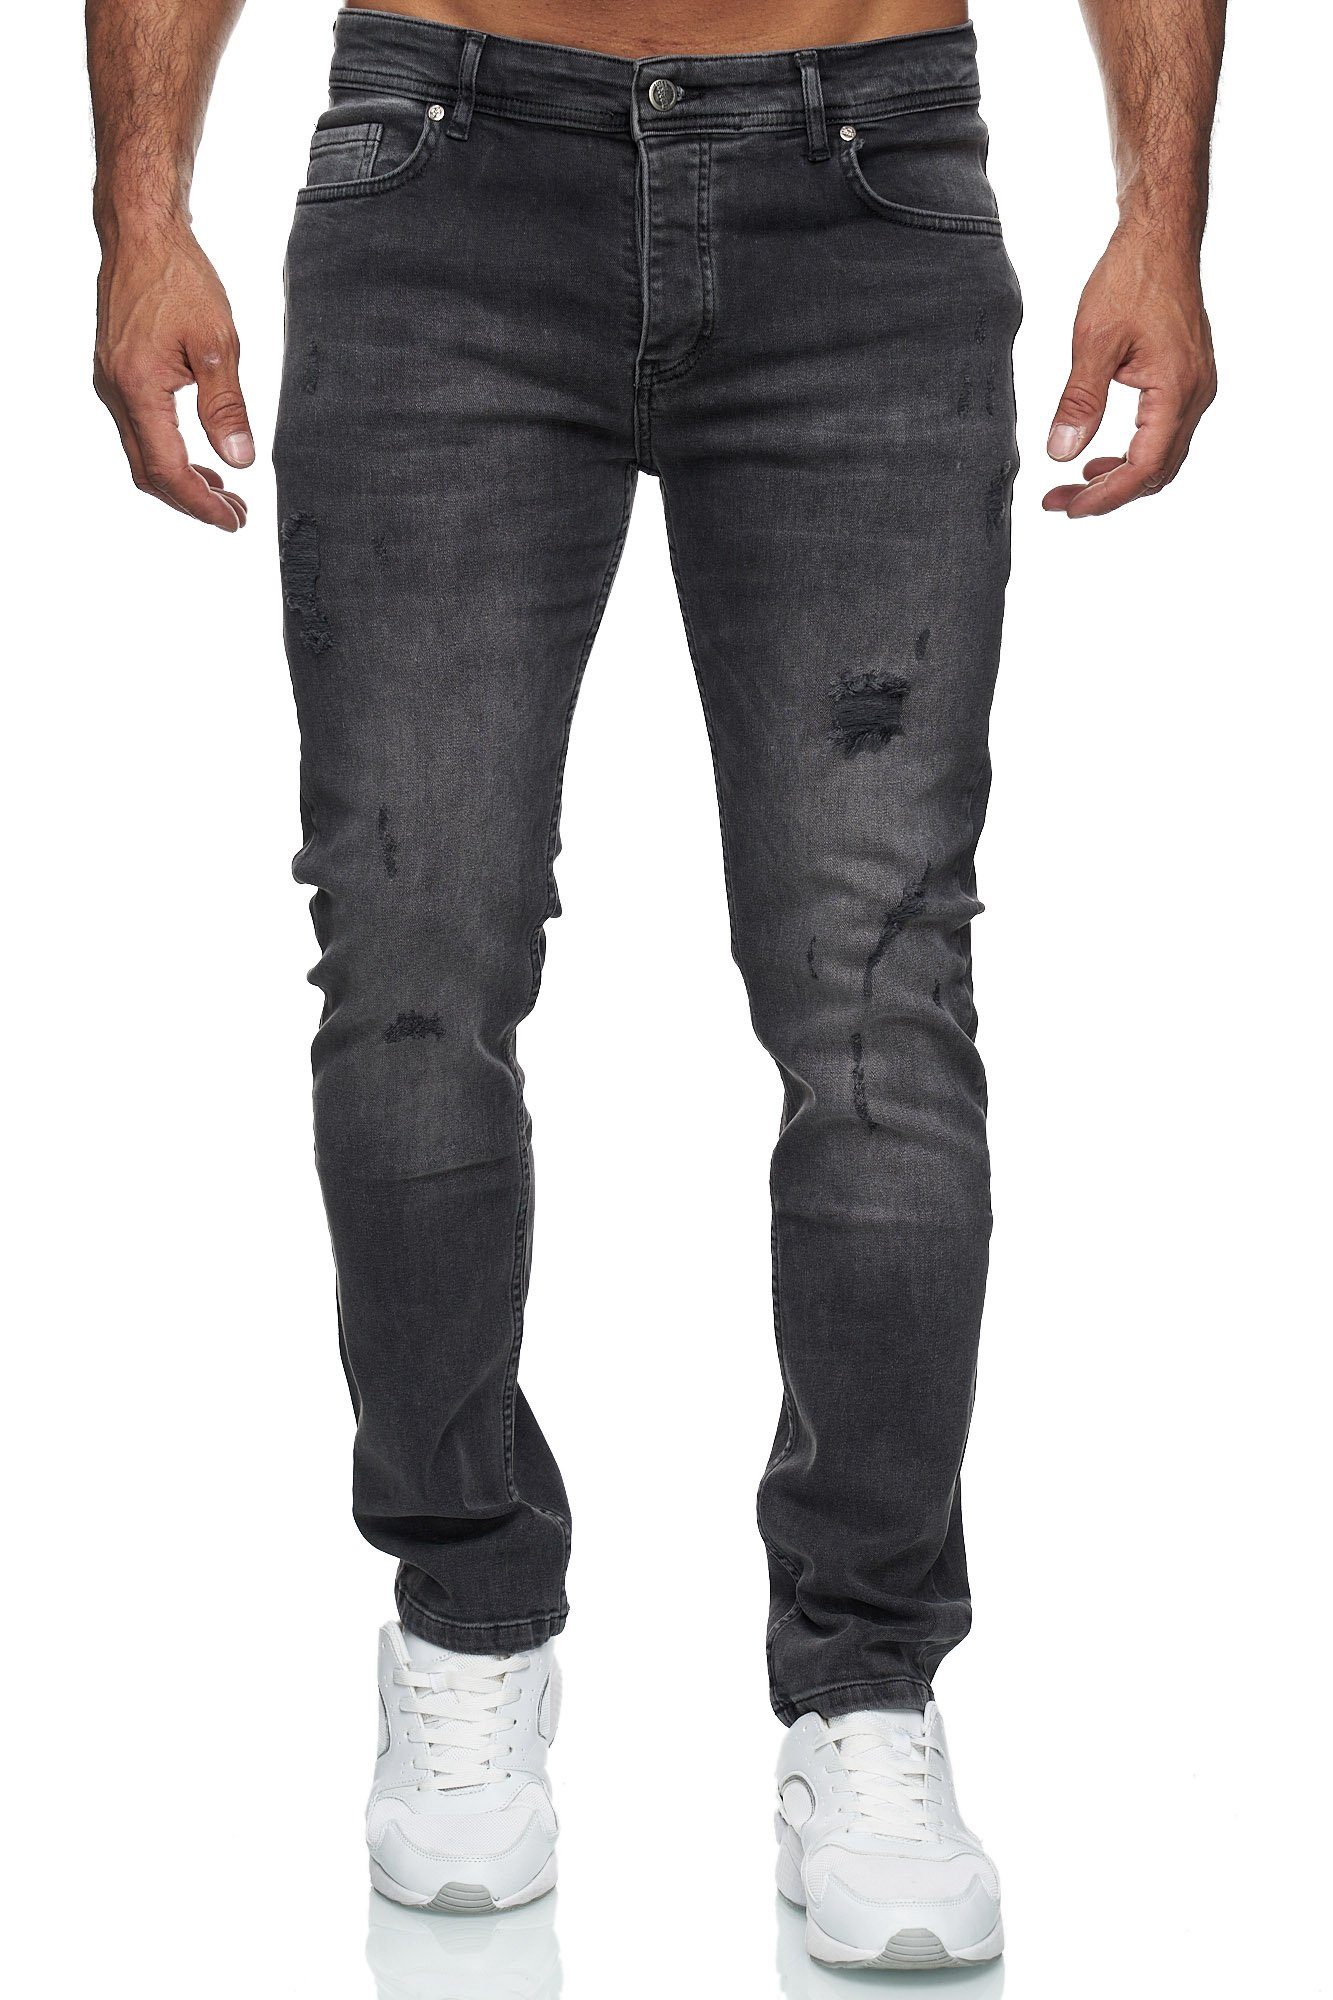 Reslad Destroyed-Jeans »Reslad Jeans Herren Destroyed Slim Fit Herren-Hose«  Destroyed Look Stretch Slim Fit Jeans online kaufen | OTTO